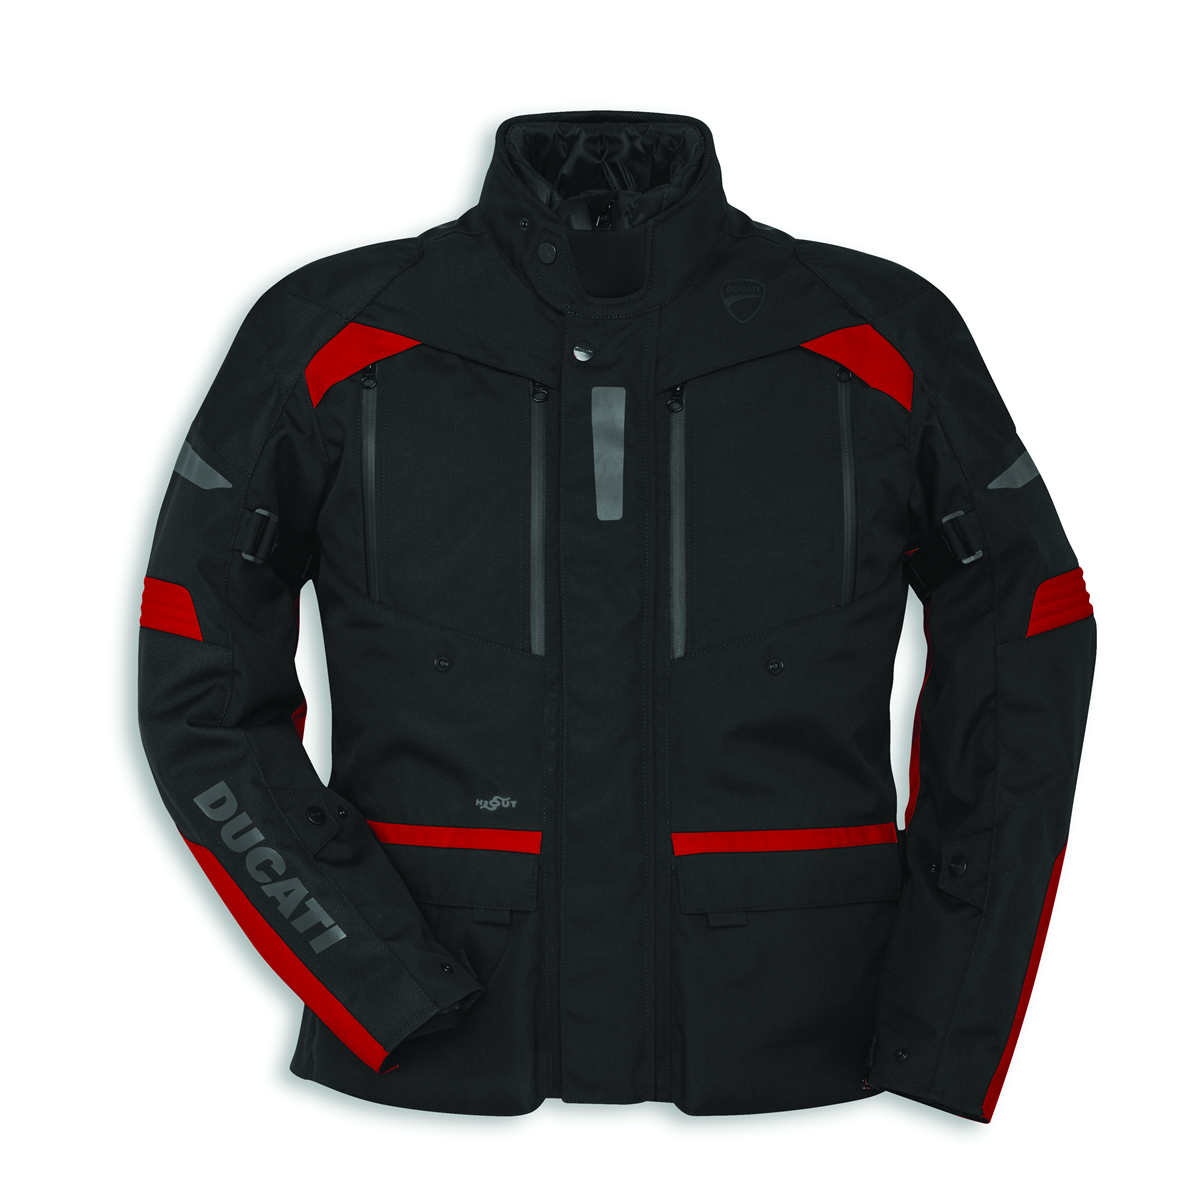 Ducati Tour C3 Men's Fabric Jacket